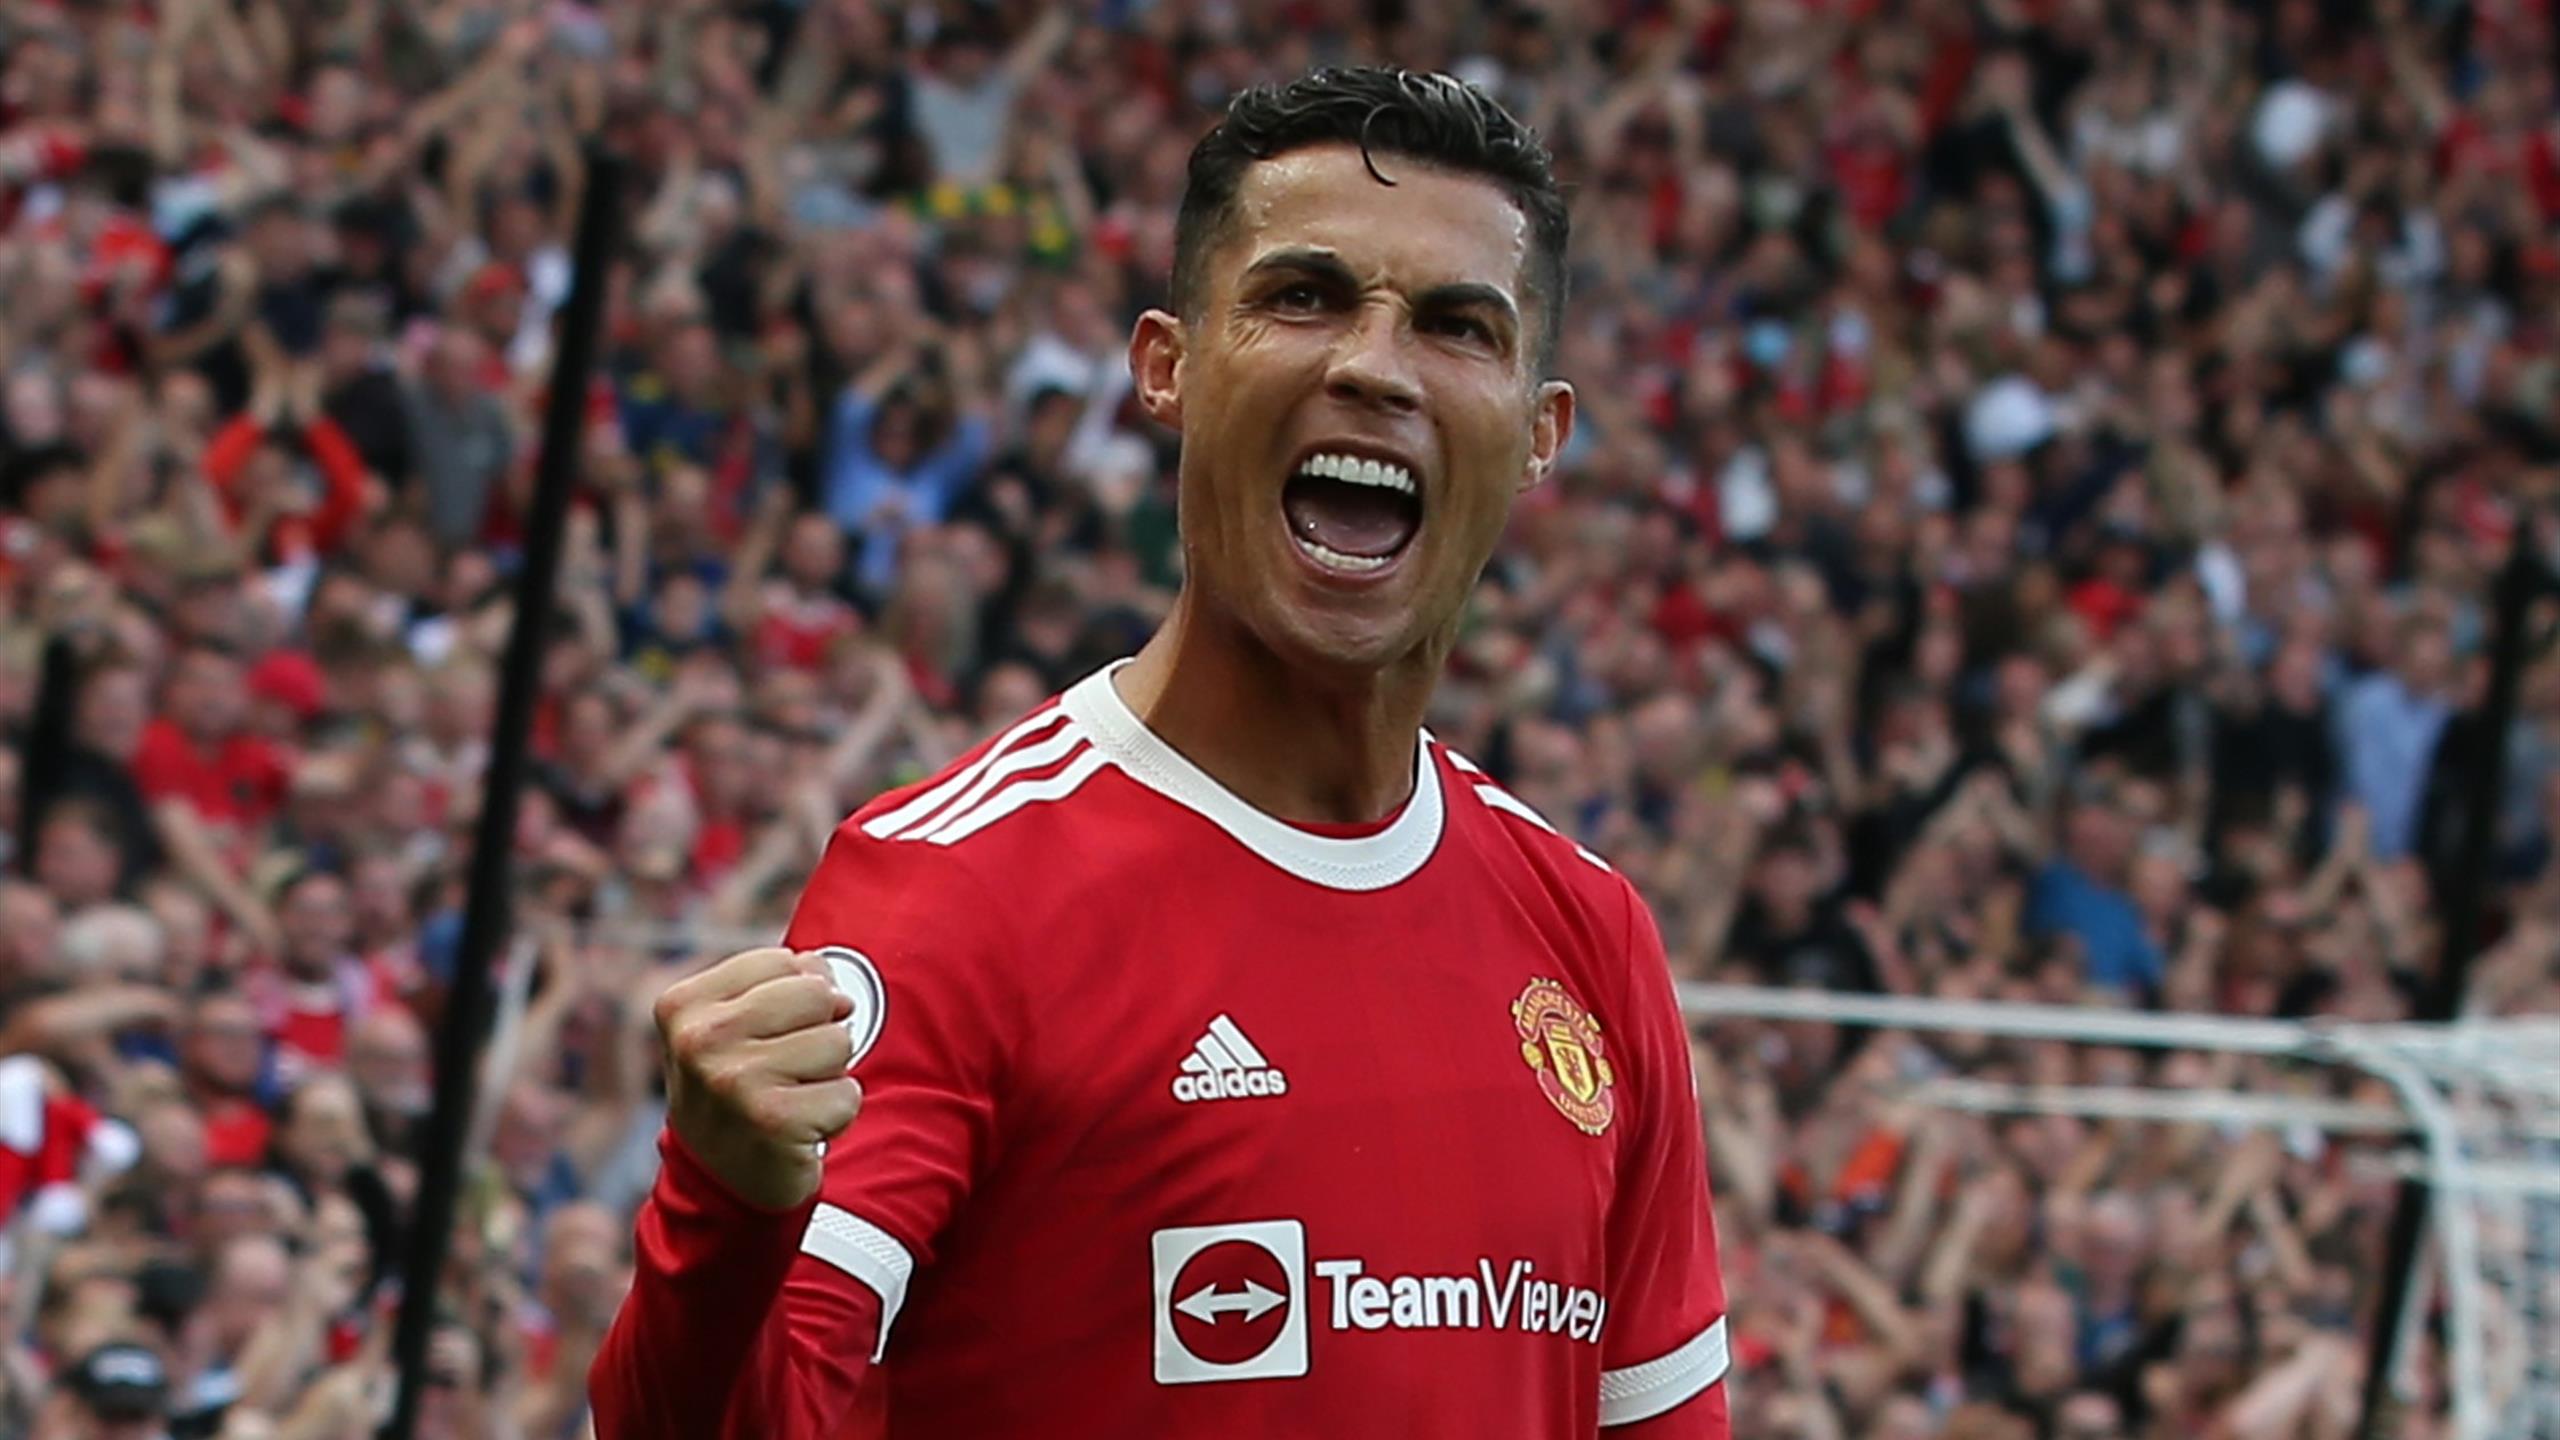 2 mặt Cristiano Ronaldo: Từ Số 7 huyền thoại tới Kẻ phản bội